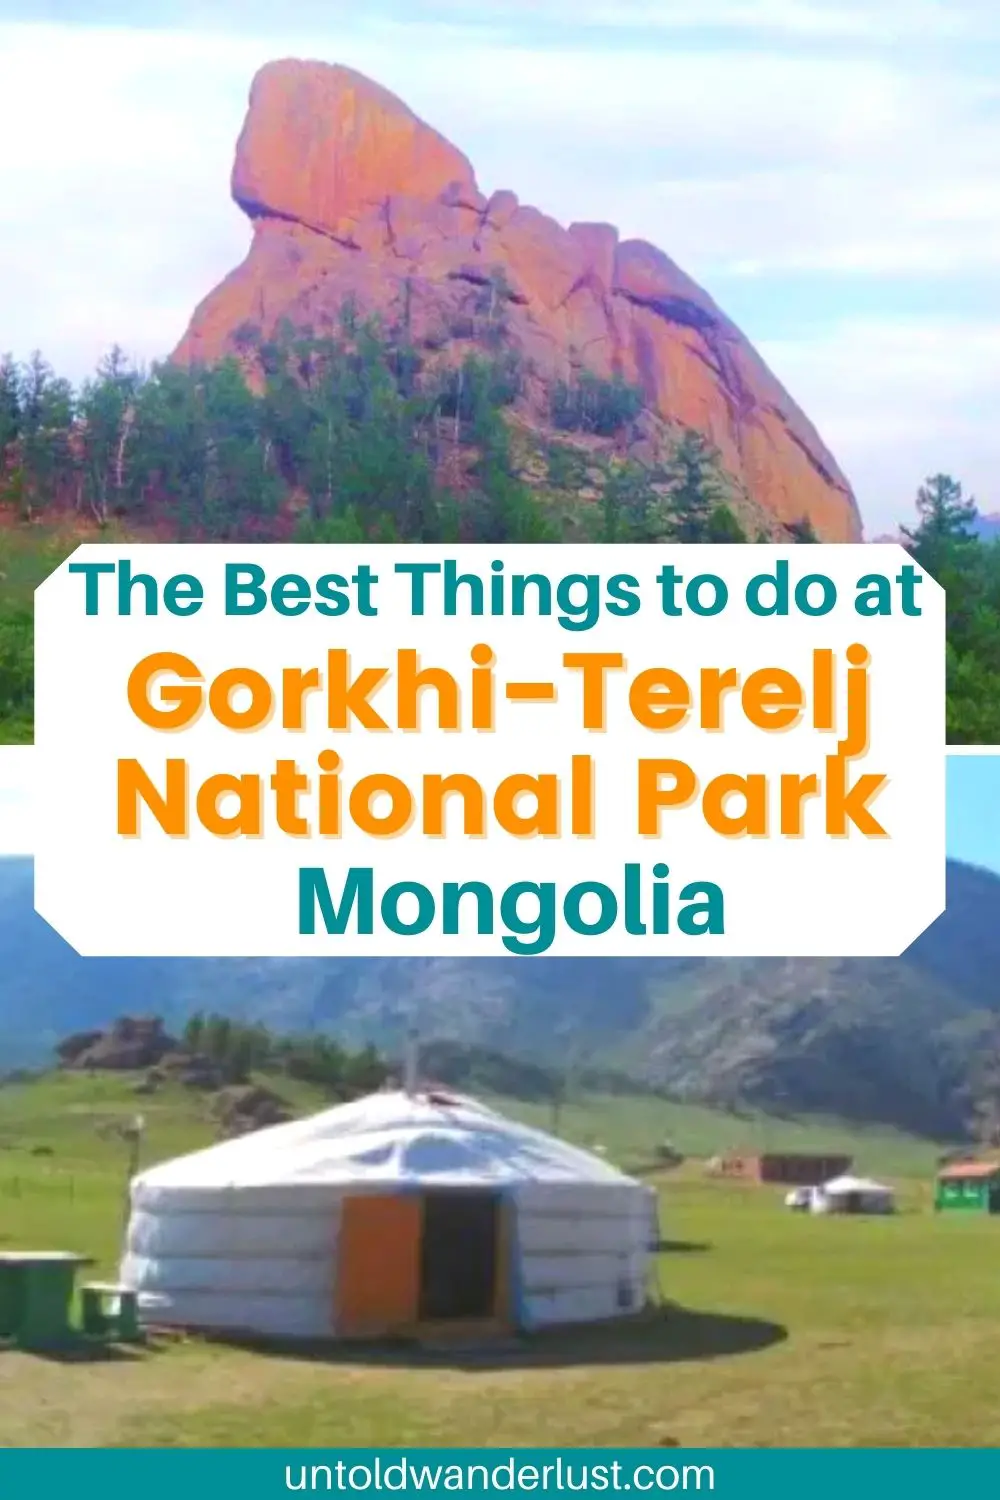 The Best Things to do at Gorkhi-Terelj National Park, Mongolia